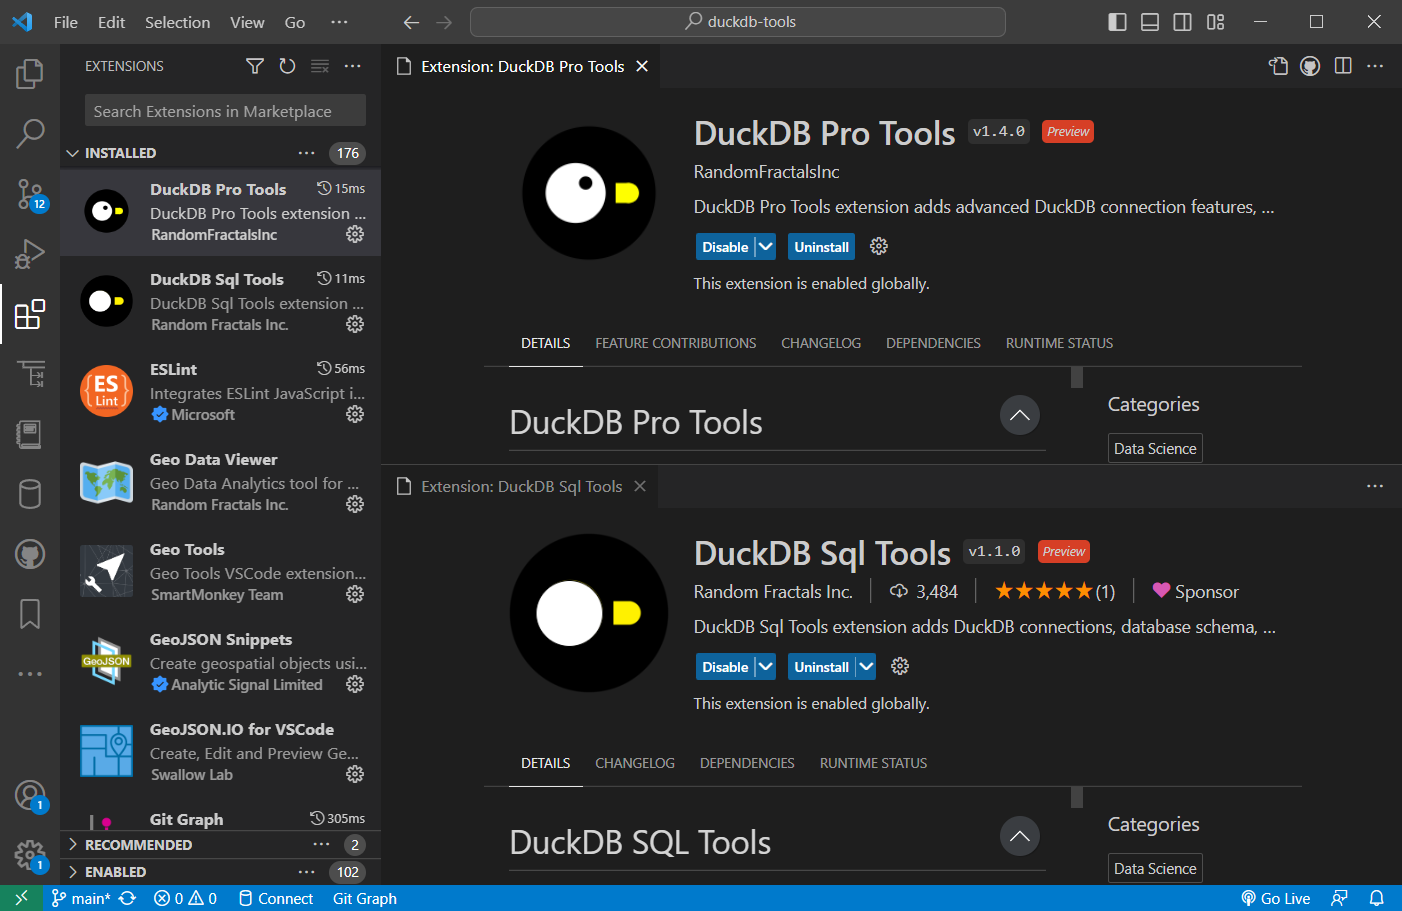 DuckDB VS Code Extensions